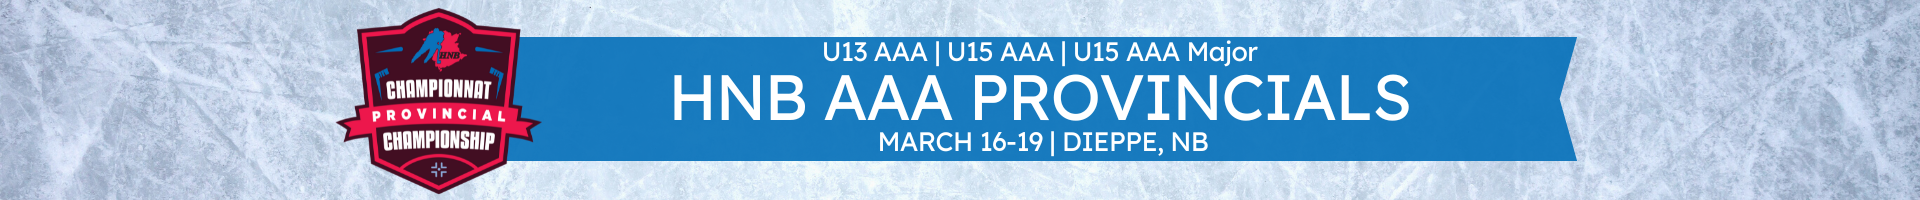 HNB AAA Provincials